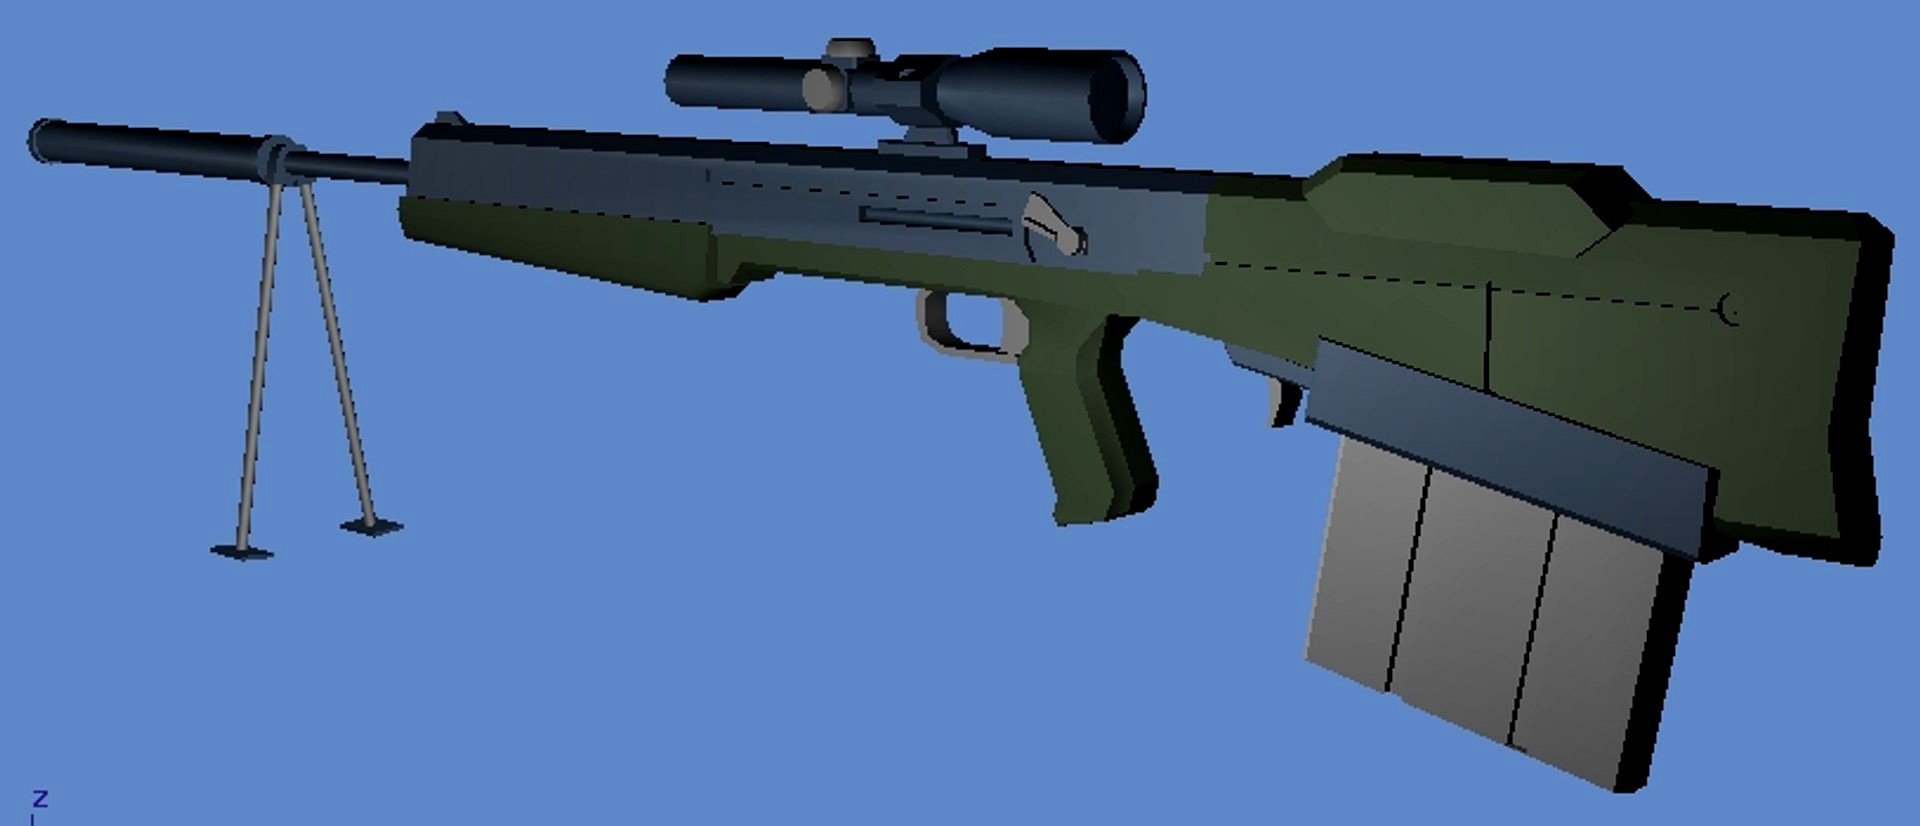 AR19A2 Multi-Purpose Rifle